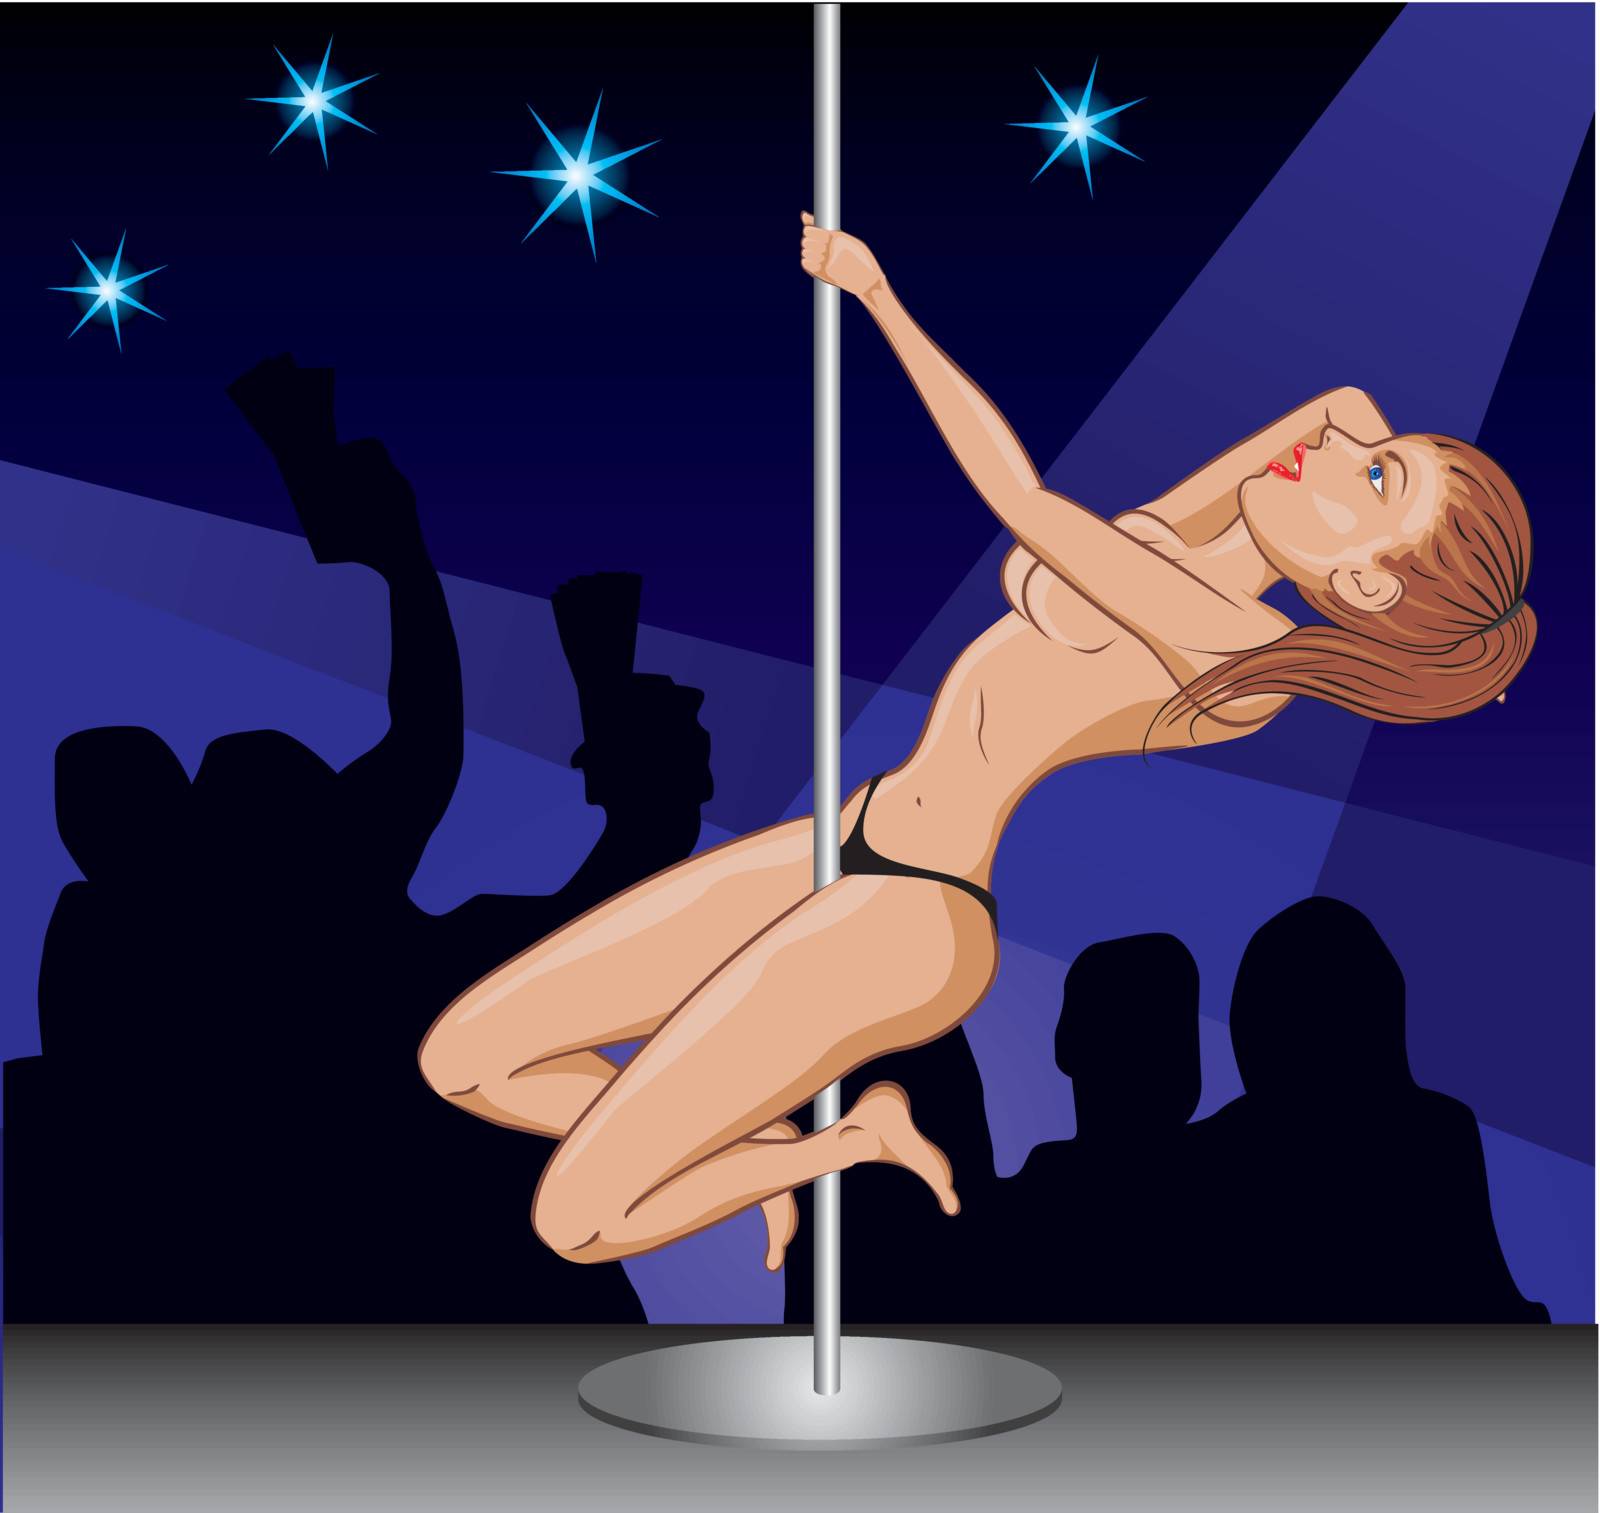 Erotic pole dancer by oxygen64